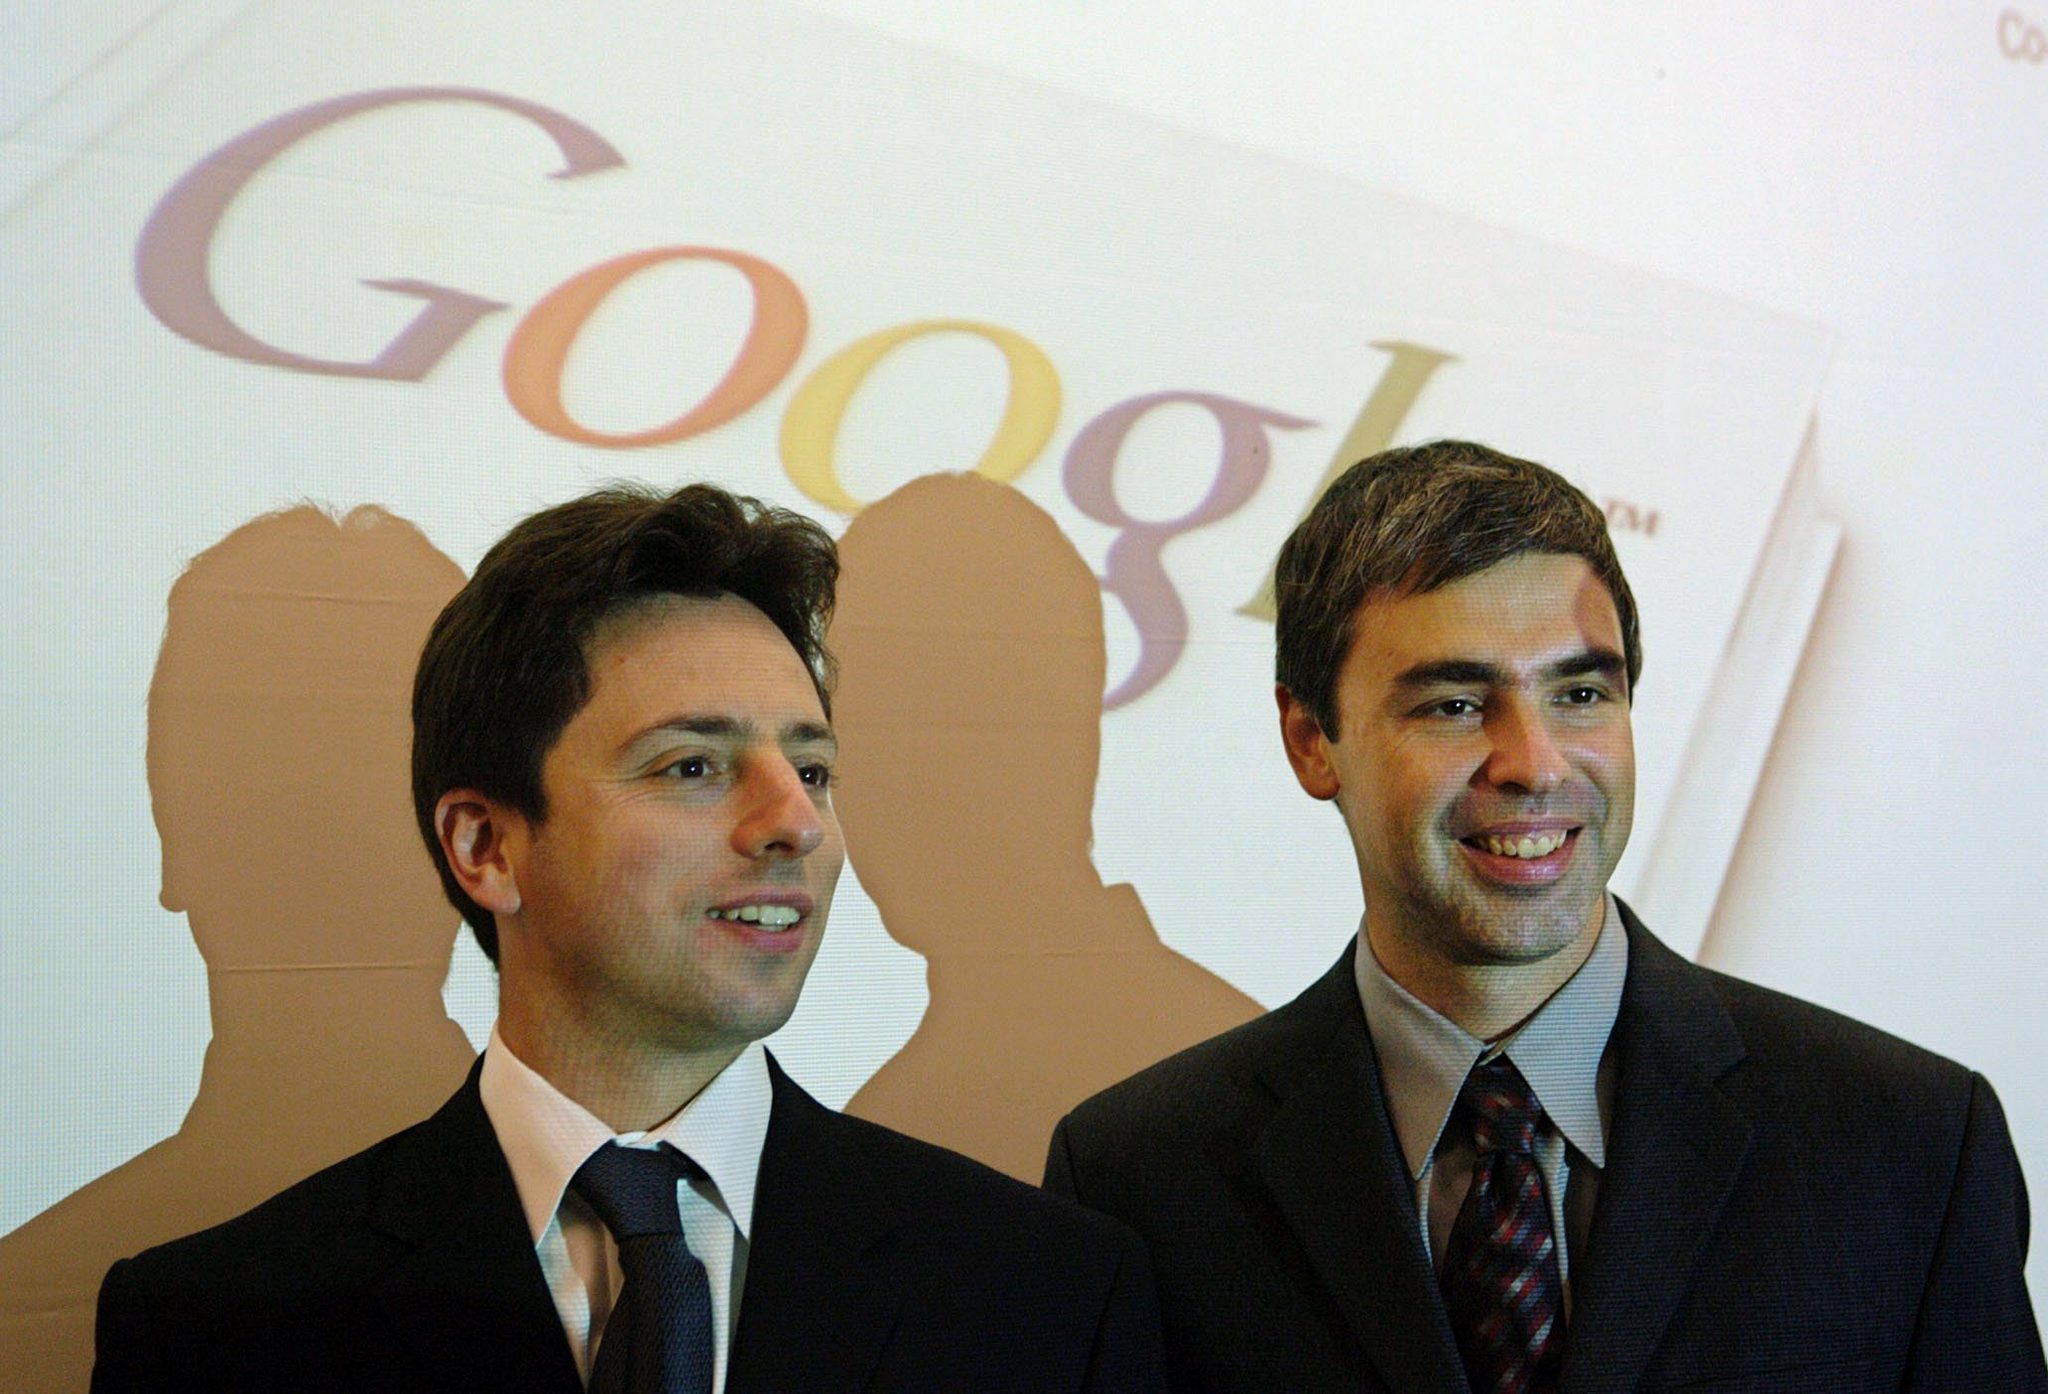 Google-oprichters Larry Page en Sergey Brin in hun jonge jaren in 2004.